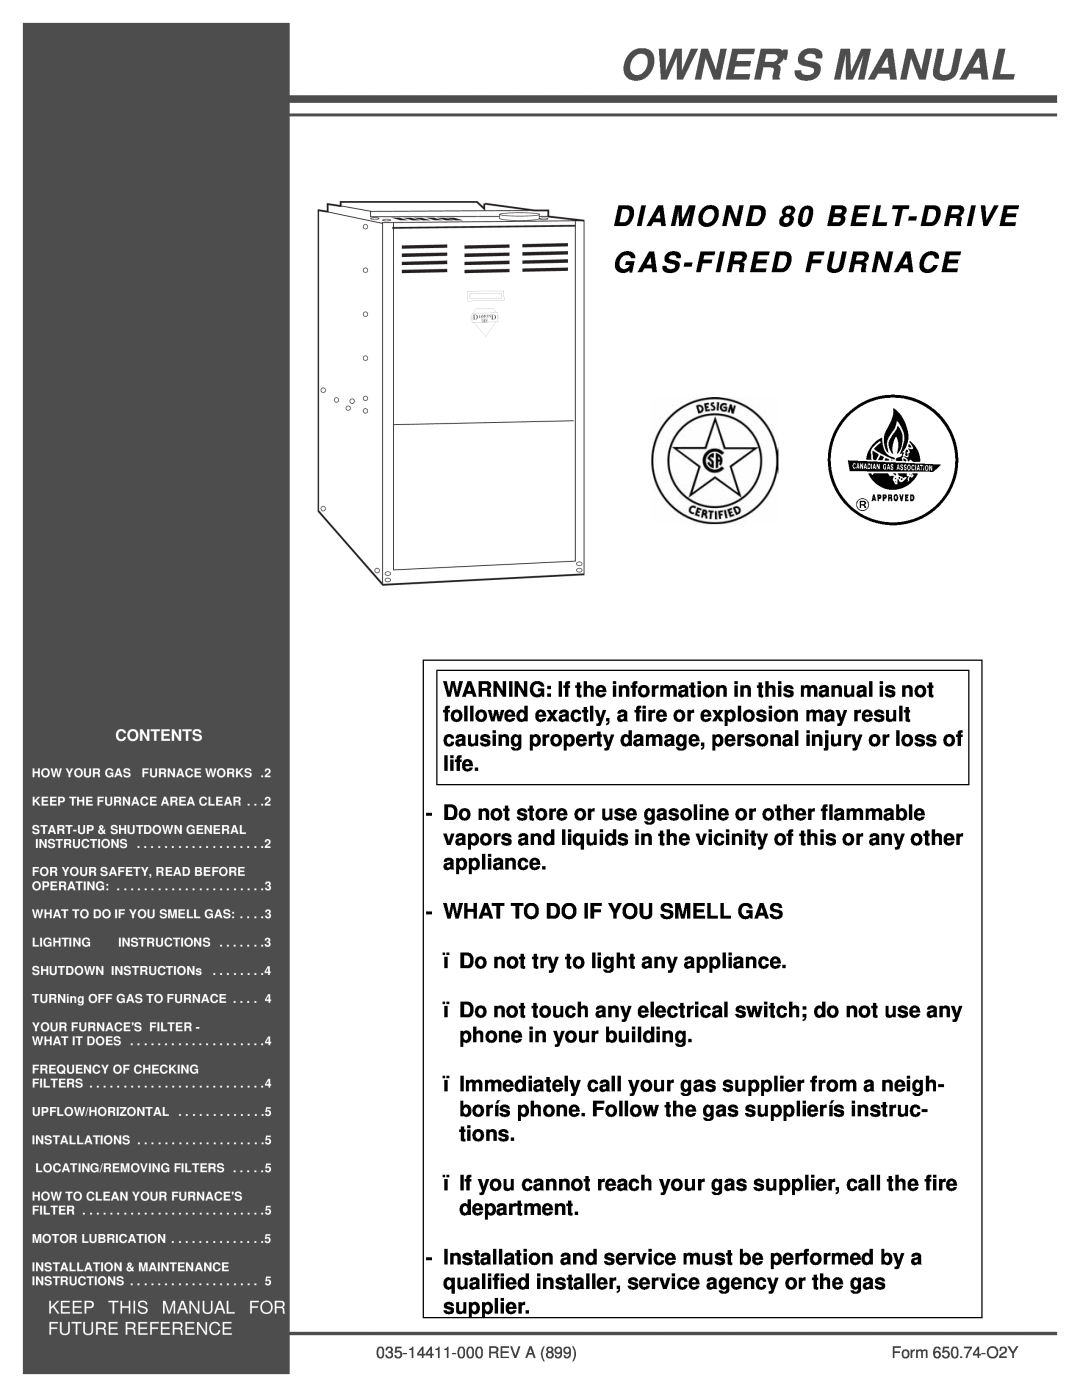 White Rodgers owner manual DIAMOND 80 BELT-DRIVE GAS-FIREDFURNACE 